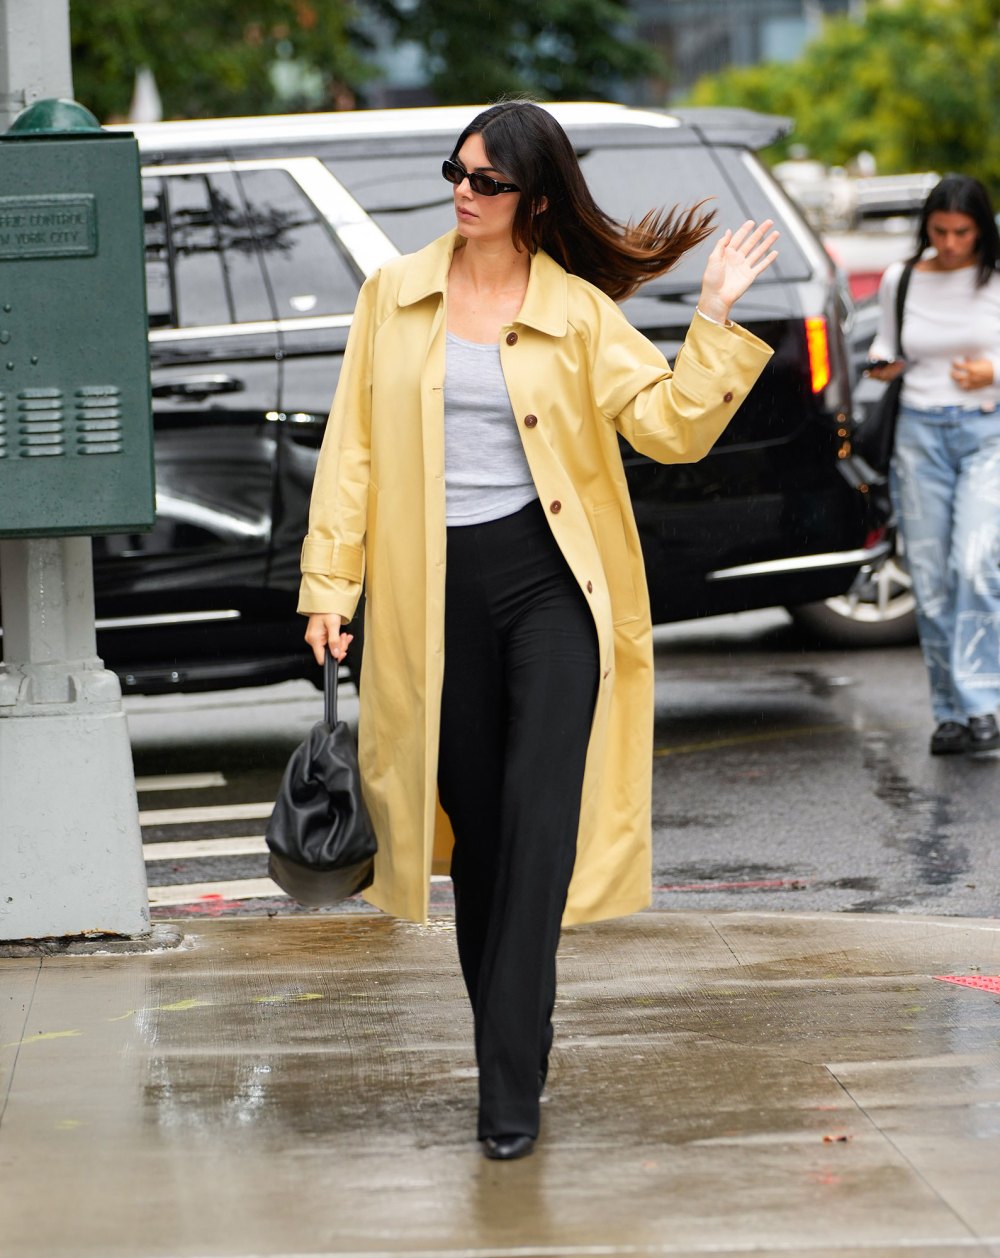 Celebrities Who Look Stylish in the Rain